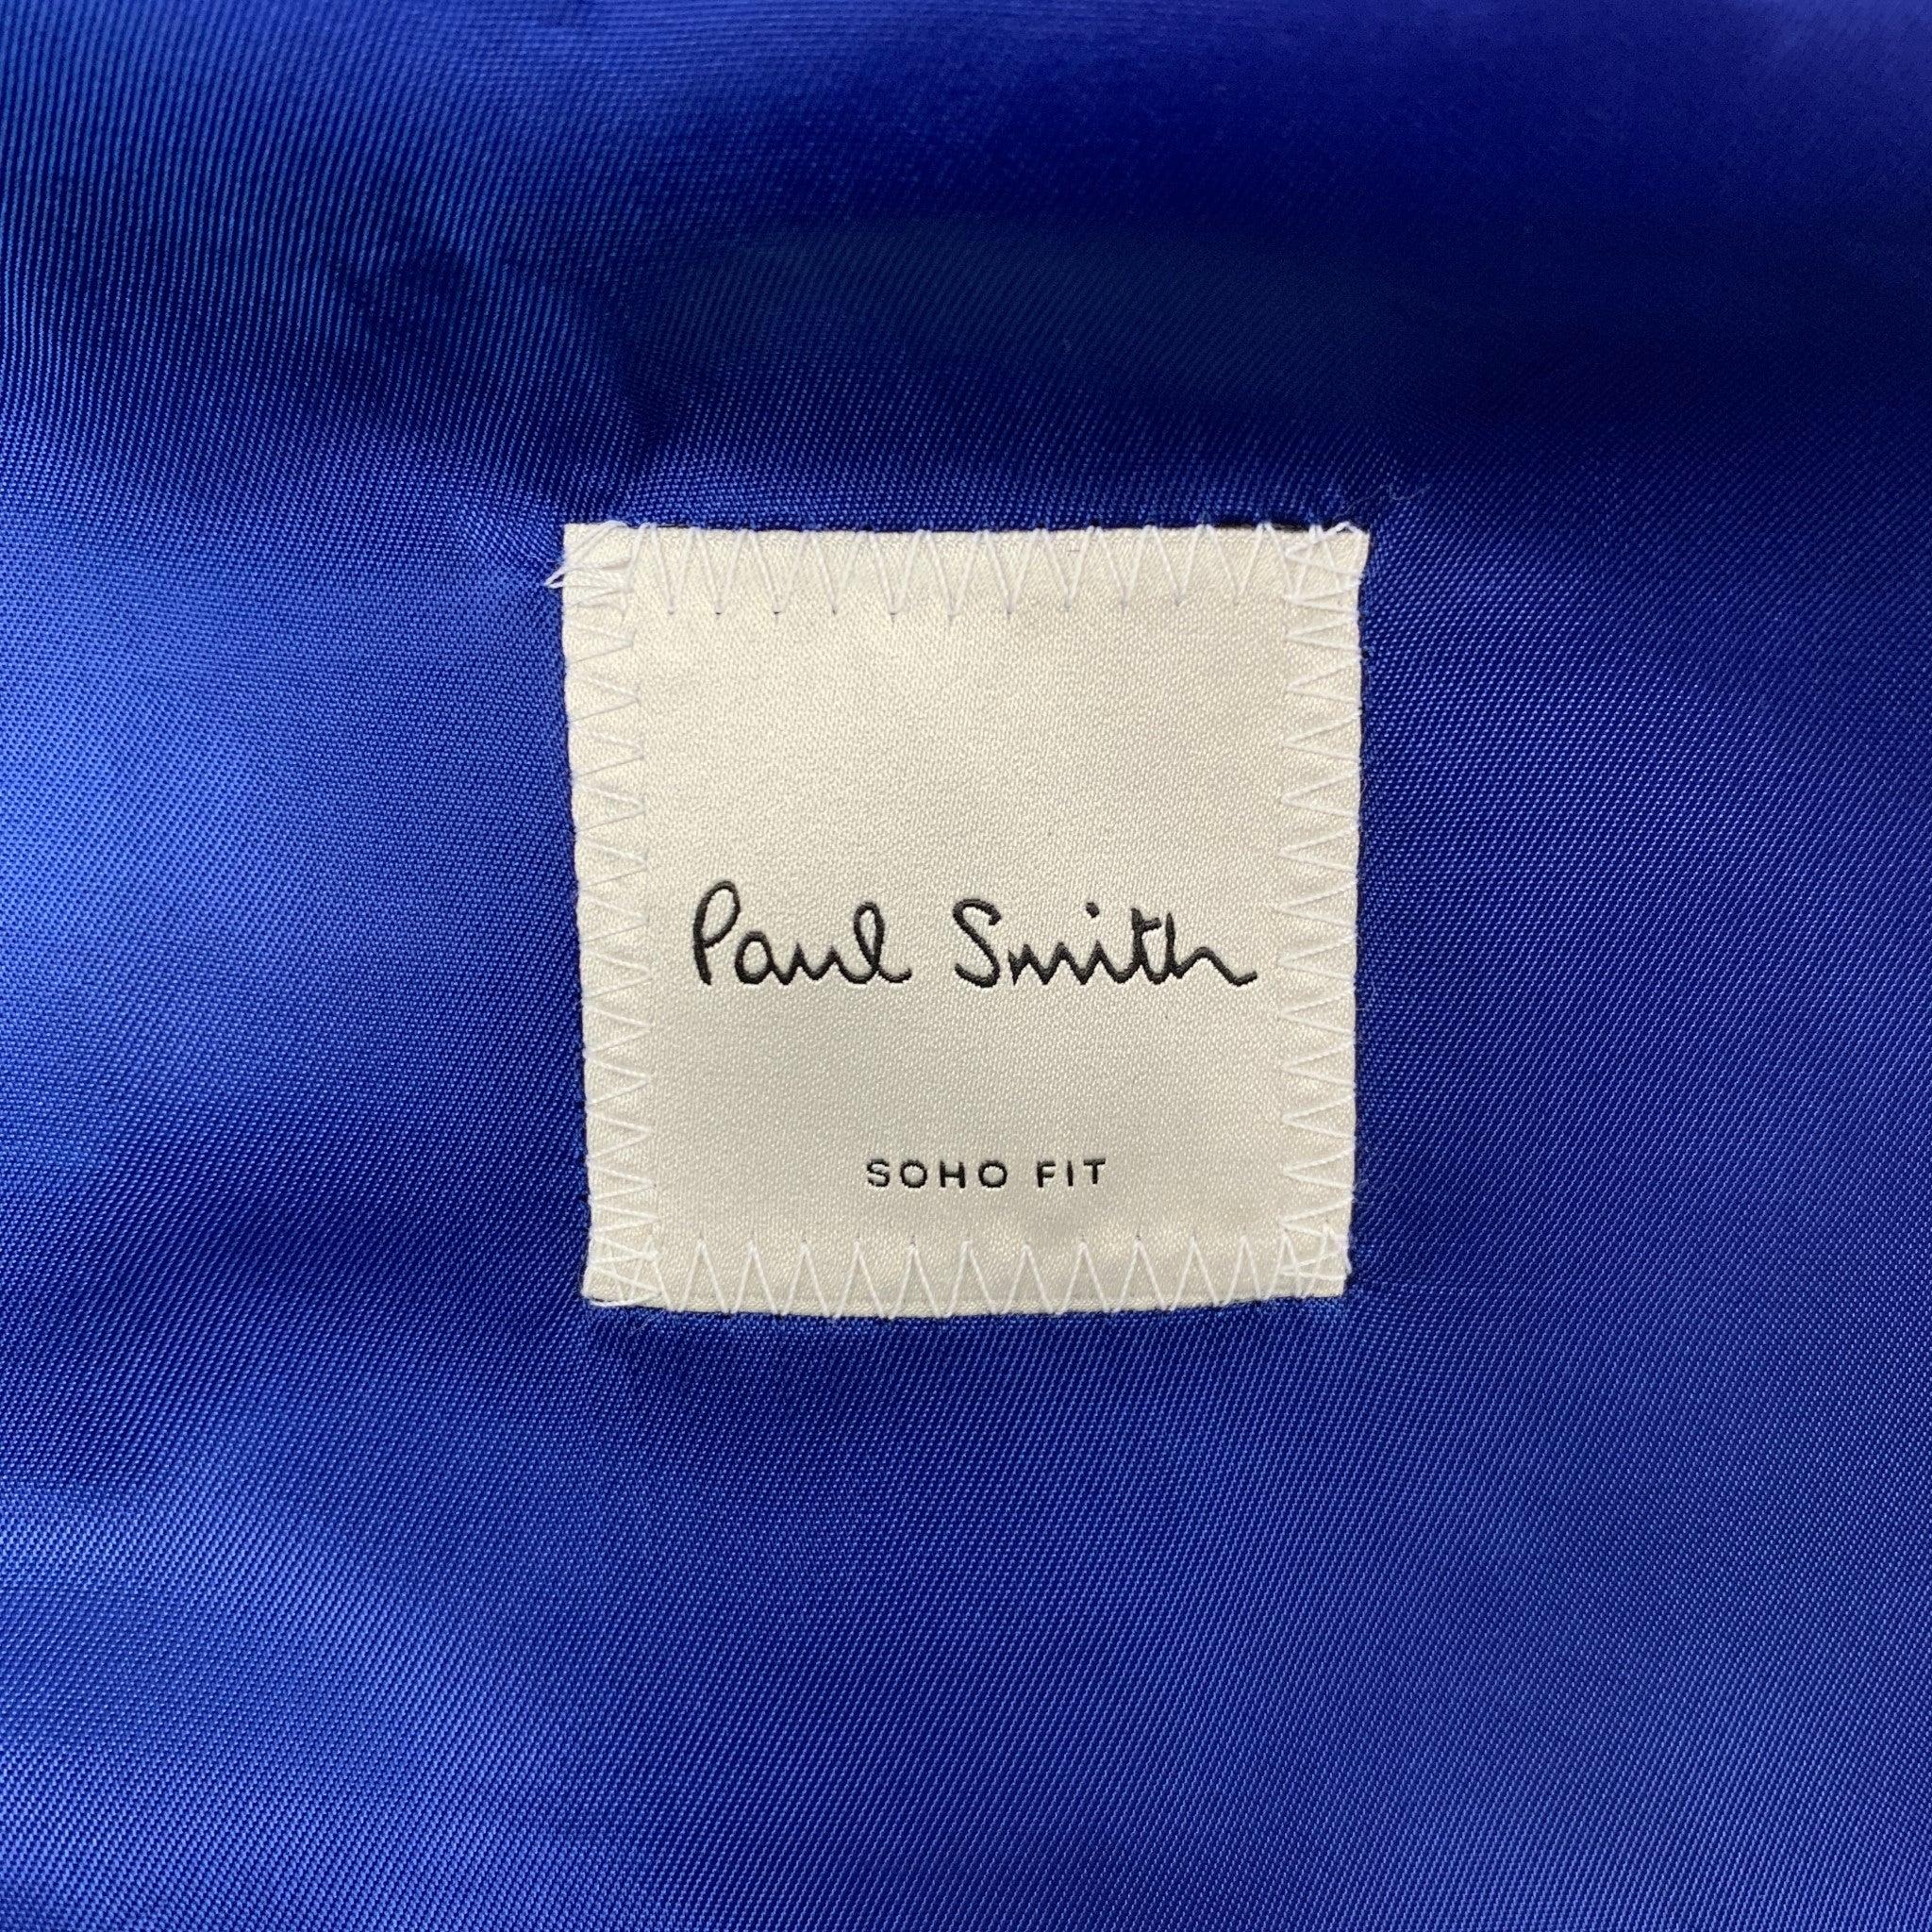 PAUL SMITH Soho Fit Size 46 Teal Wool / Mohair Peak Lapel Sport Coat 3